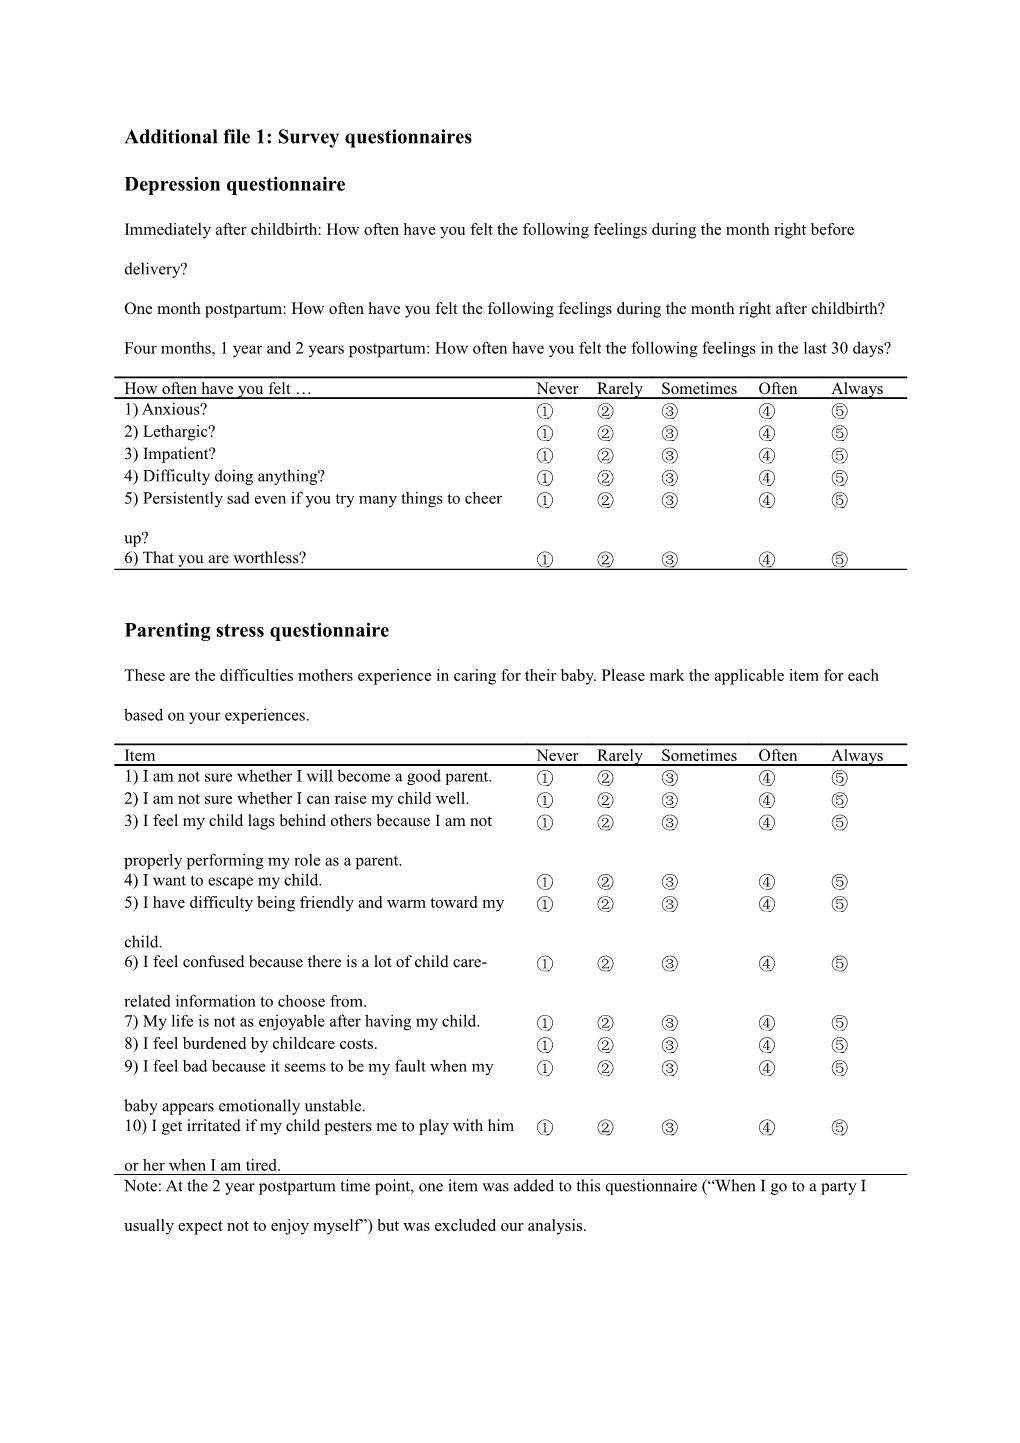 Additional File 1: Survey Questionnaires